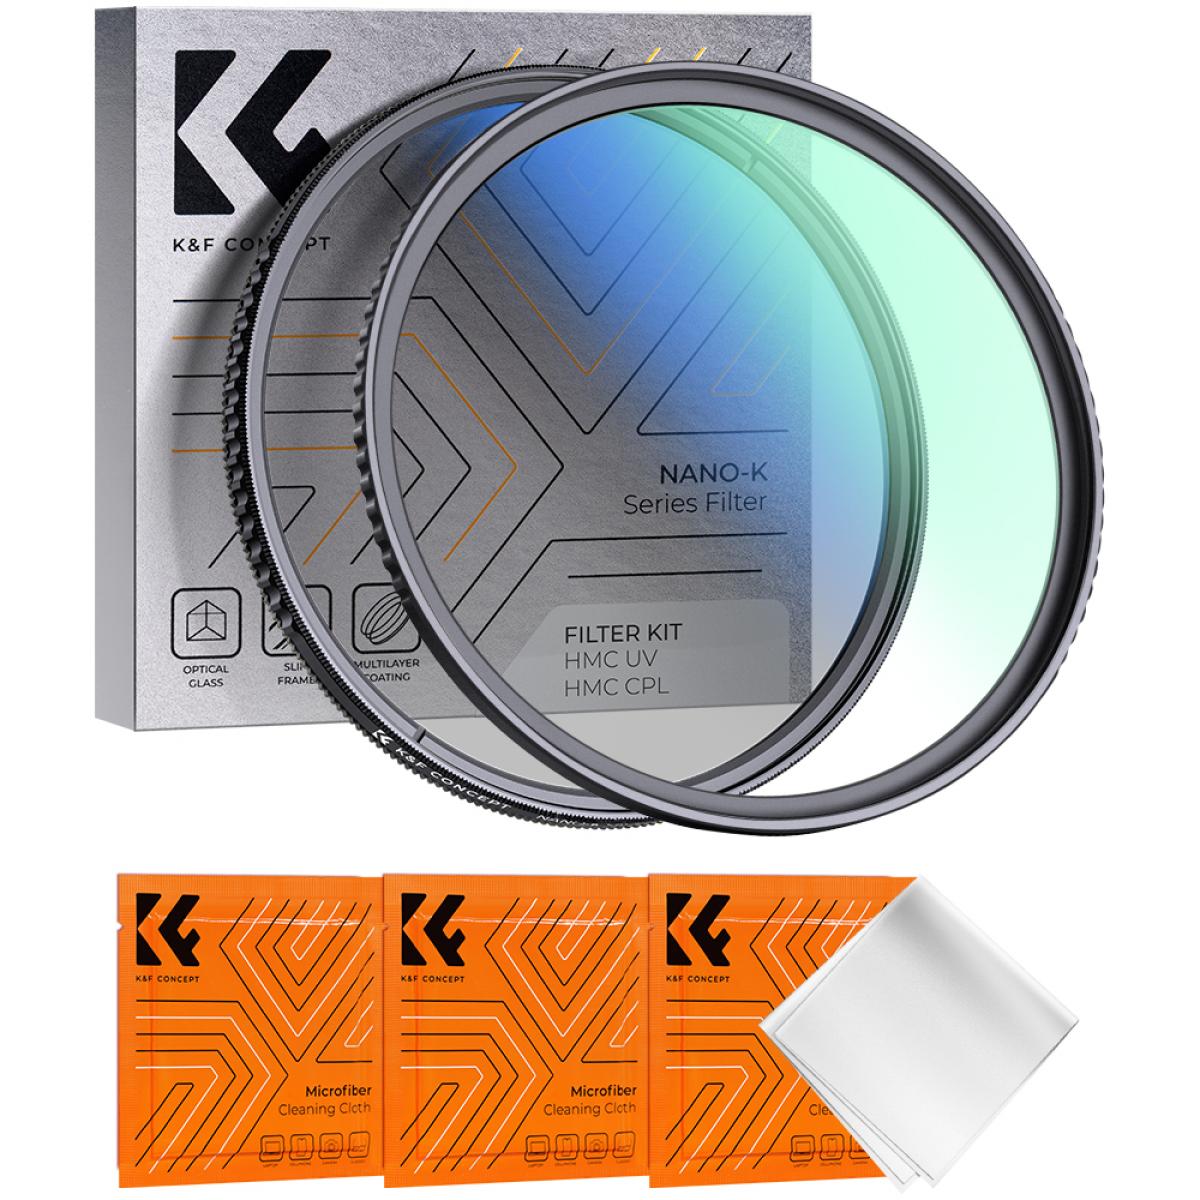 Filter Kit MCUV + CPL Circular Polarizer Filter & MCUV Protection Filter HD Ultra-thin with 18 Multi Layer Coatings Nano K Series